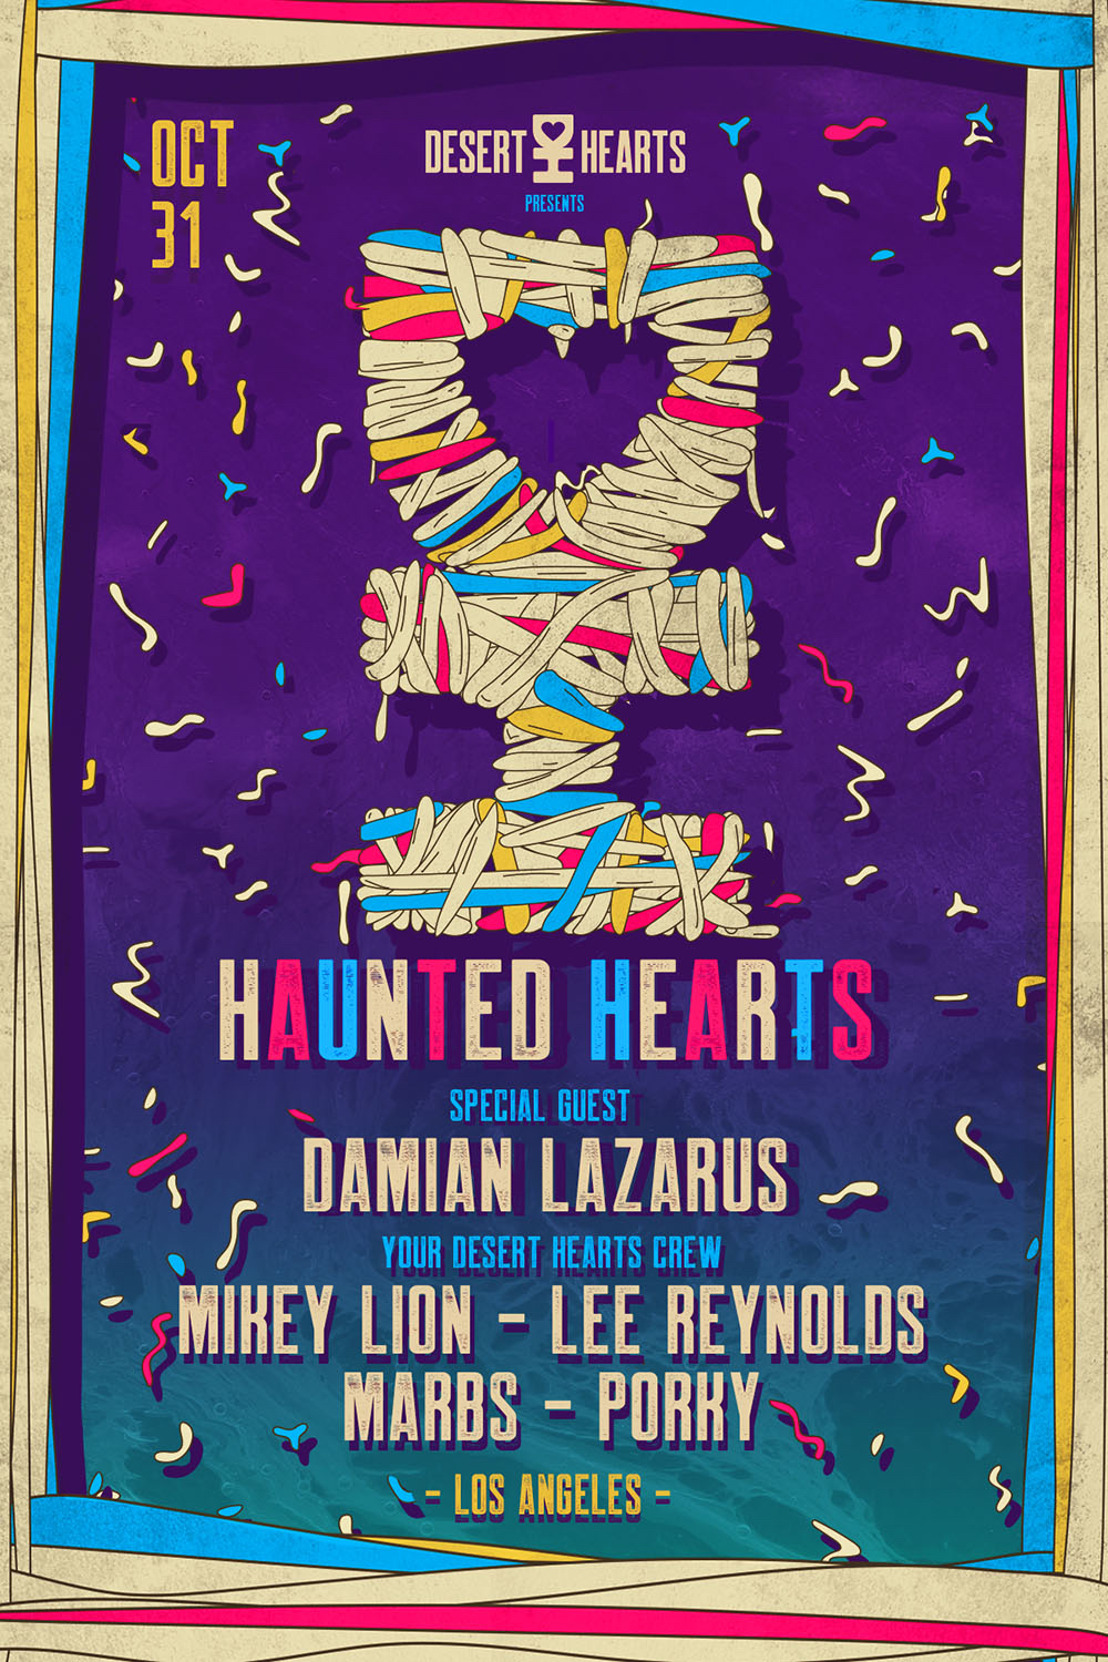 Haunted Hearts 2018 Lineup Flyer